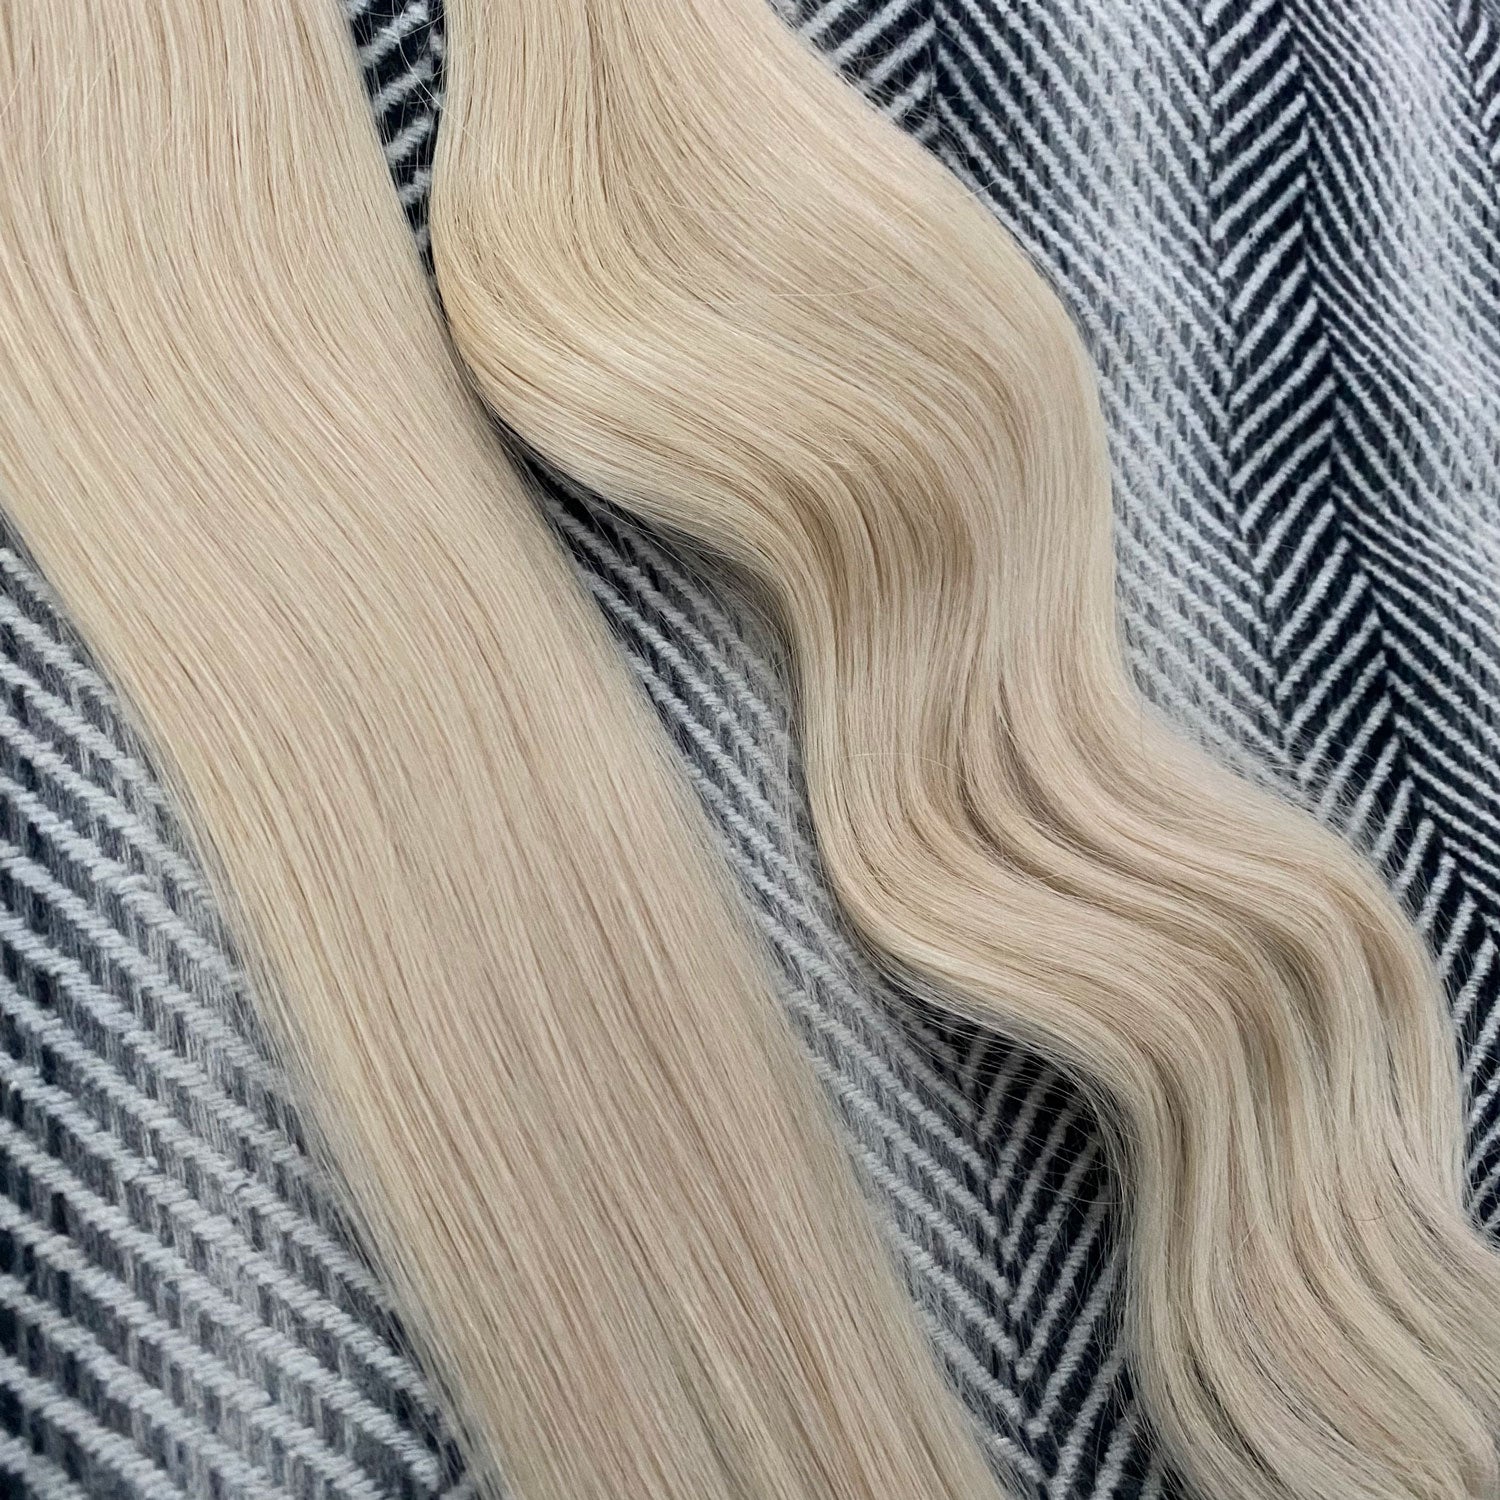 Nano Ring Hair Extensions #1001 Pearl Blonde